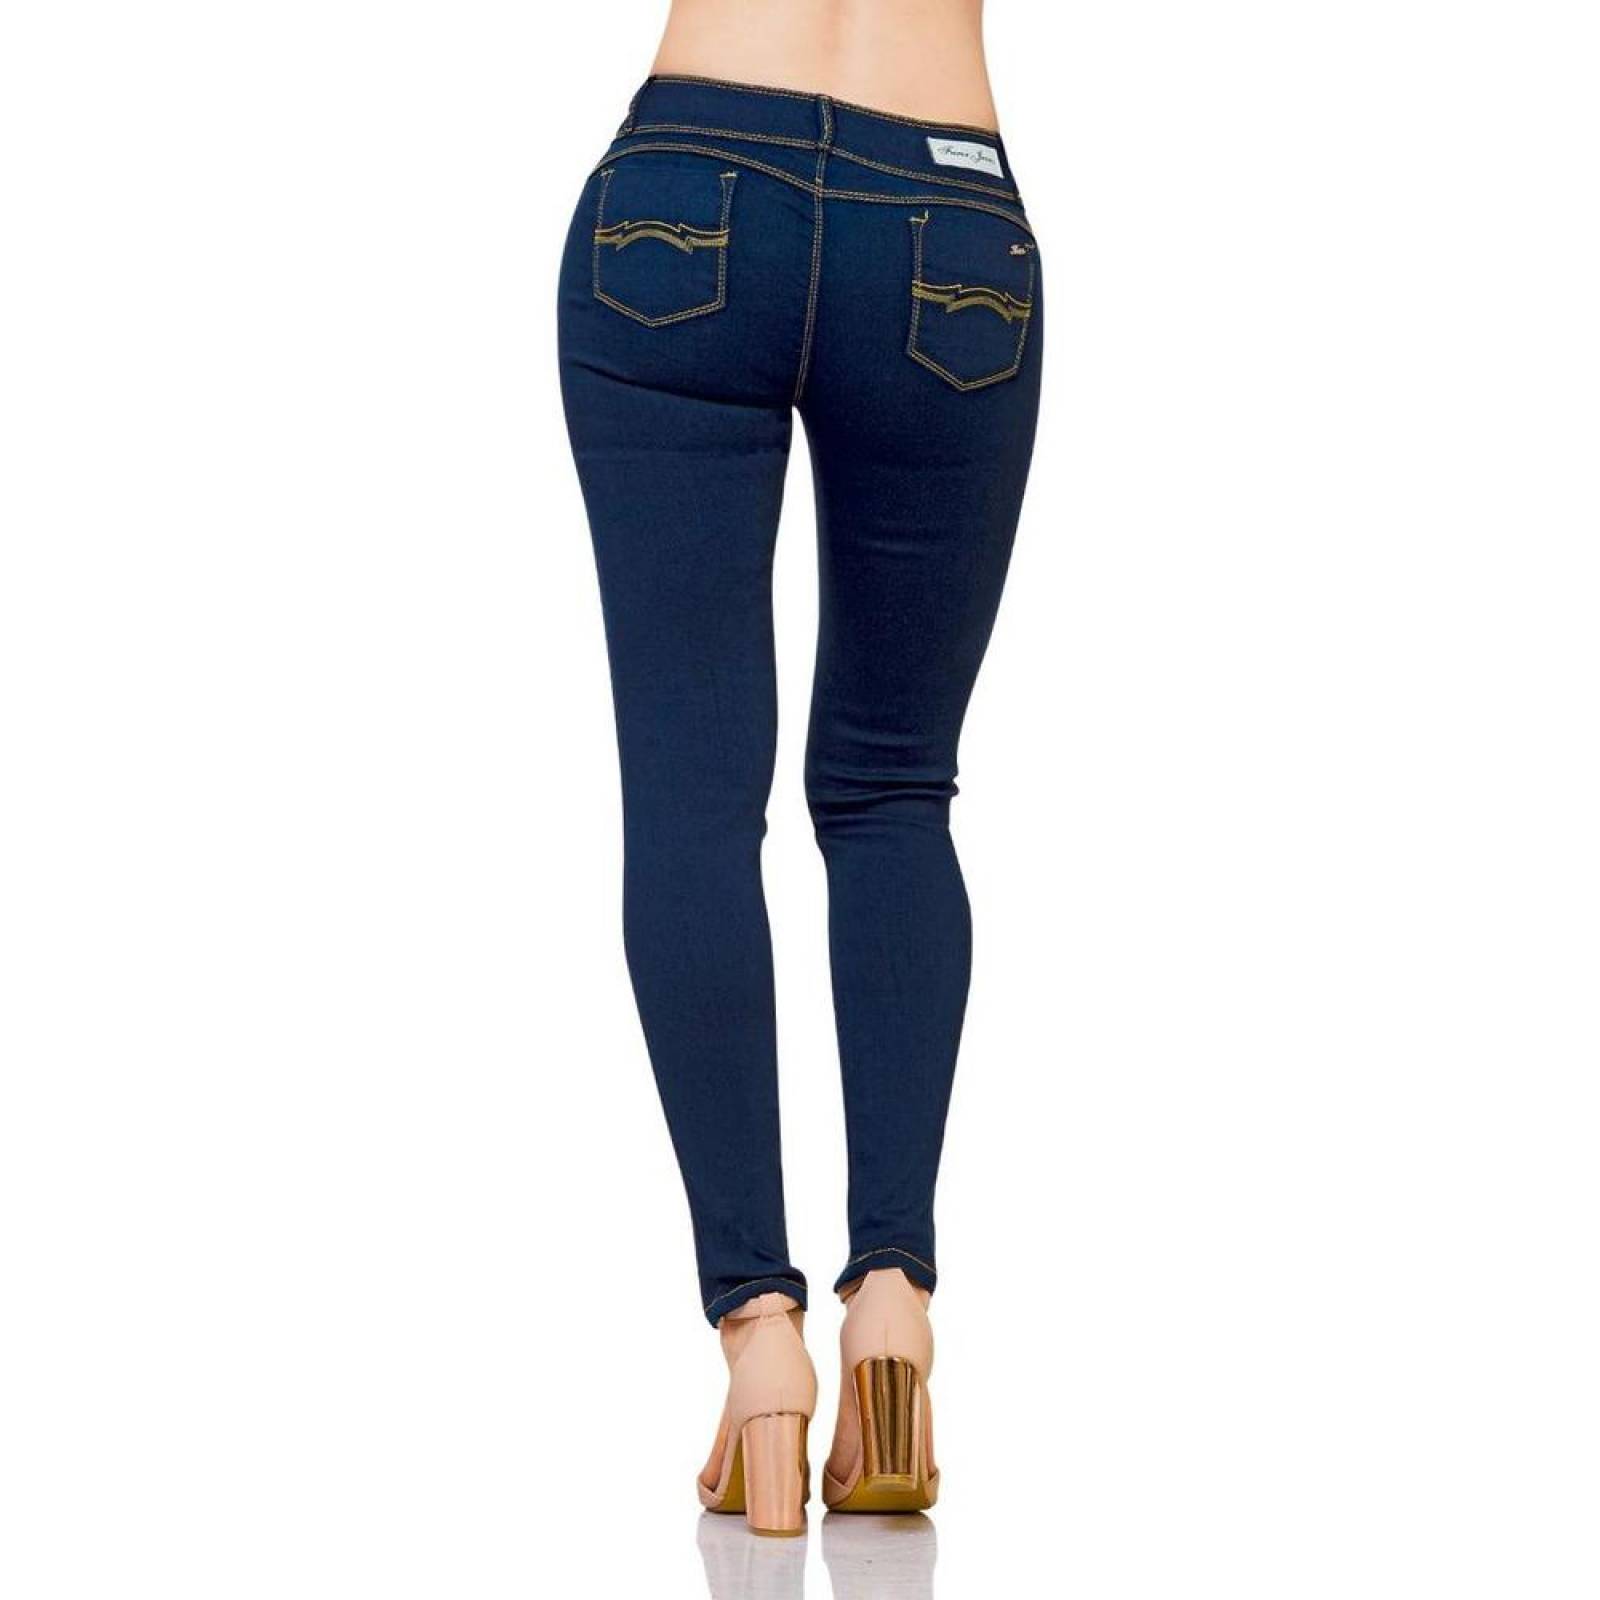 Jeans Básico Mujer Furor Indigo 62105071 Mezclilla Stretch 